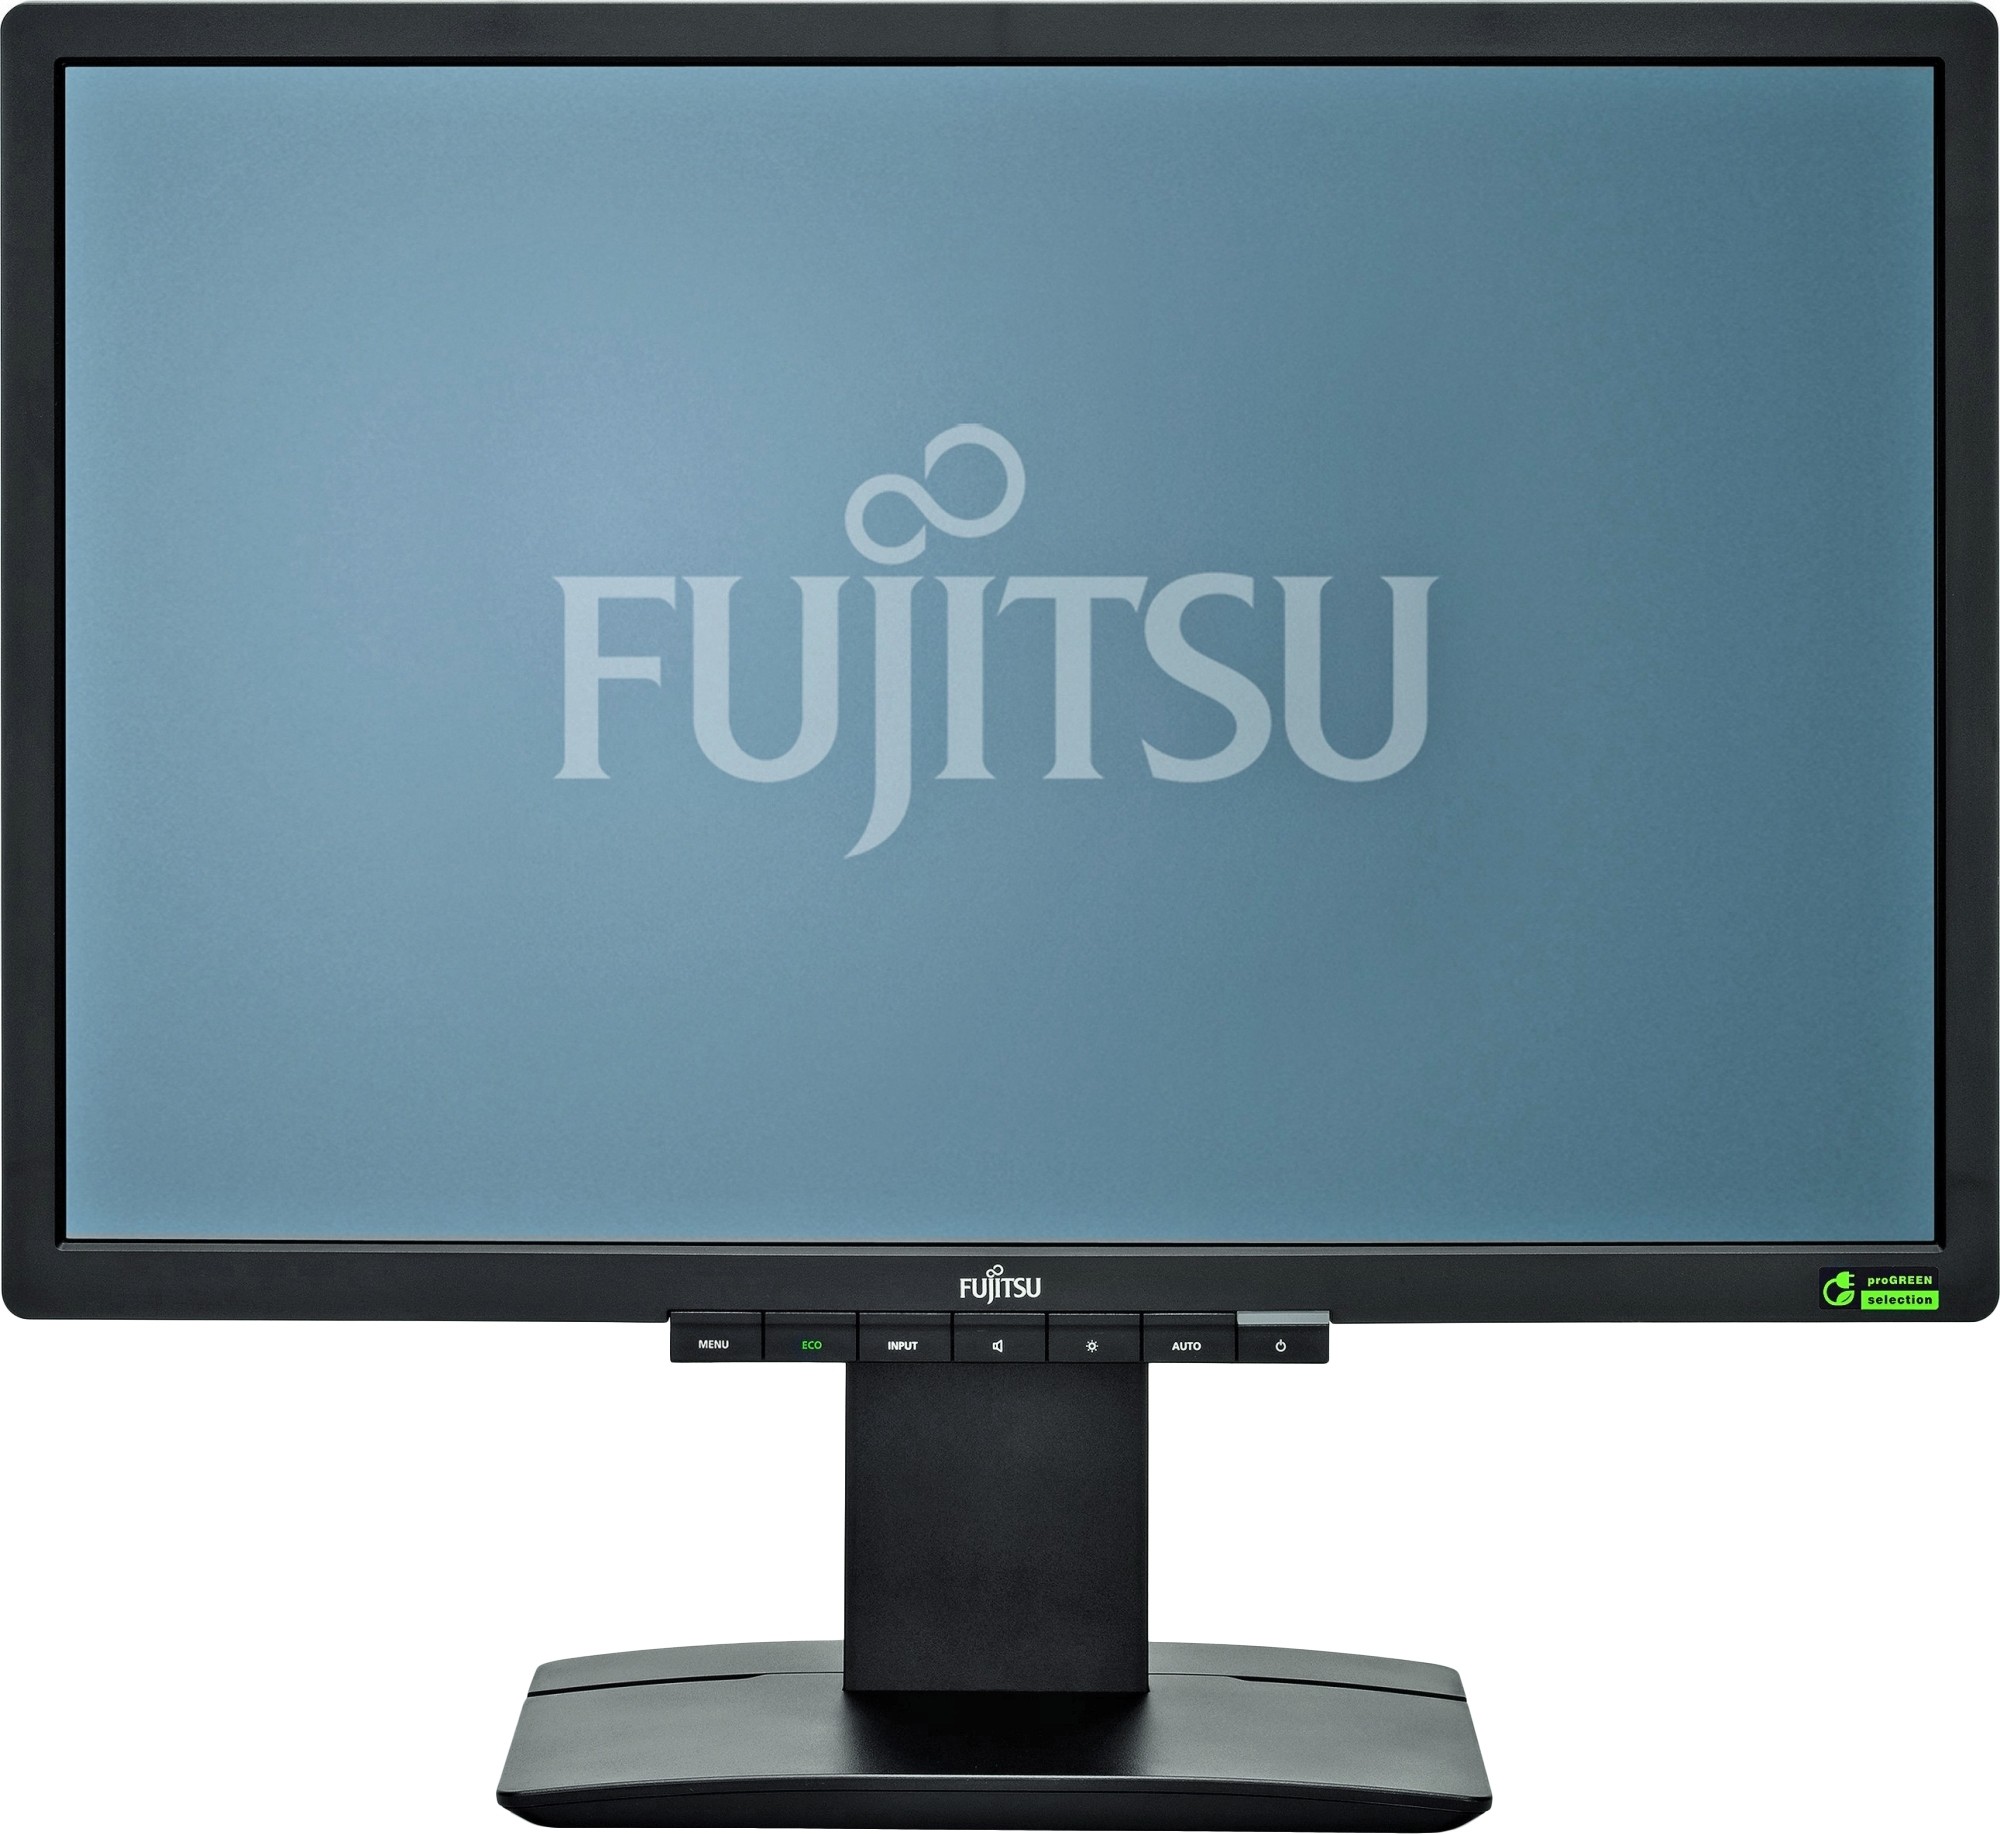 Art. Monitor Fujitsu ScenicView B22W-6- GRADO B - 22" - VGA/DVI - Negro